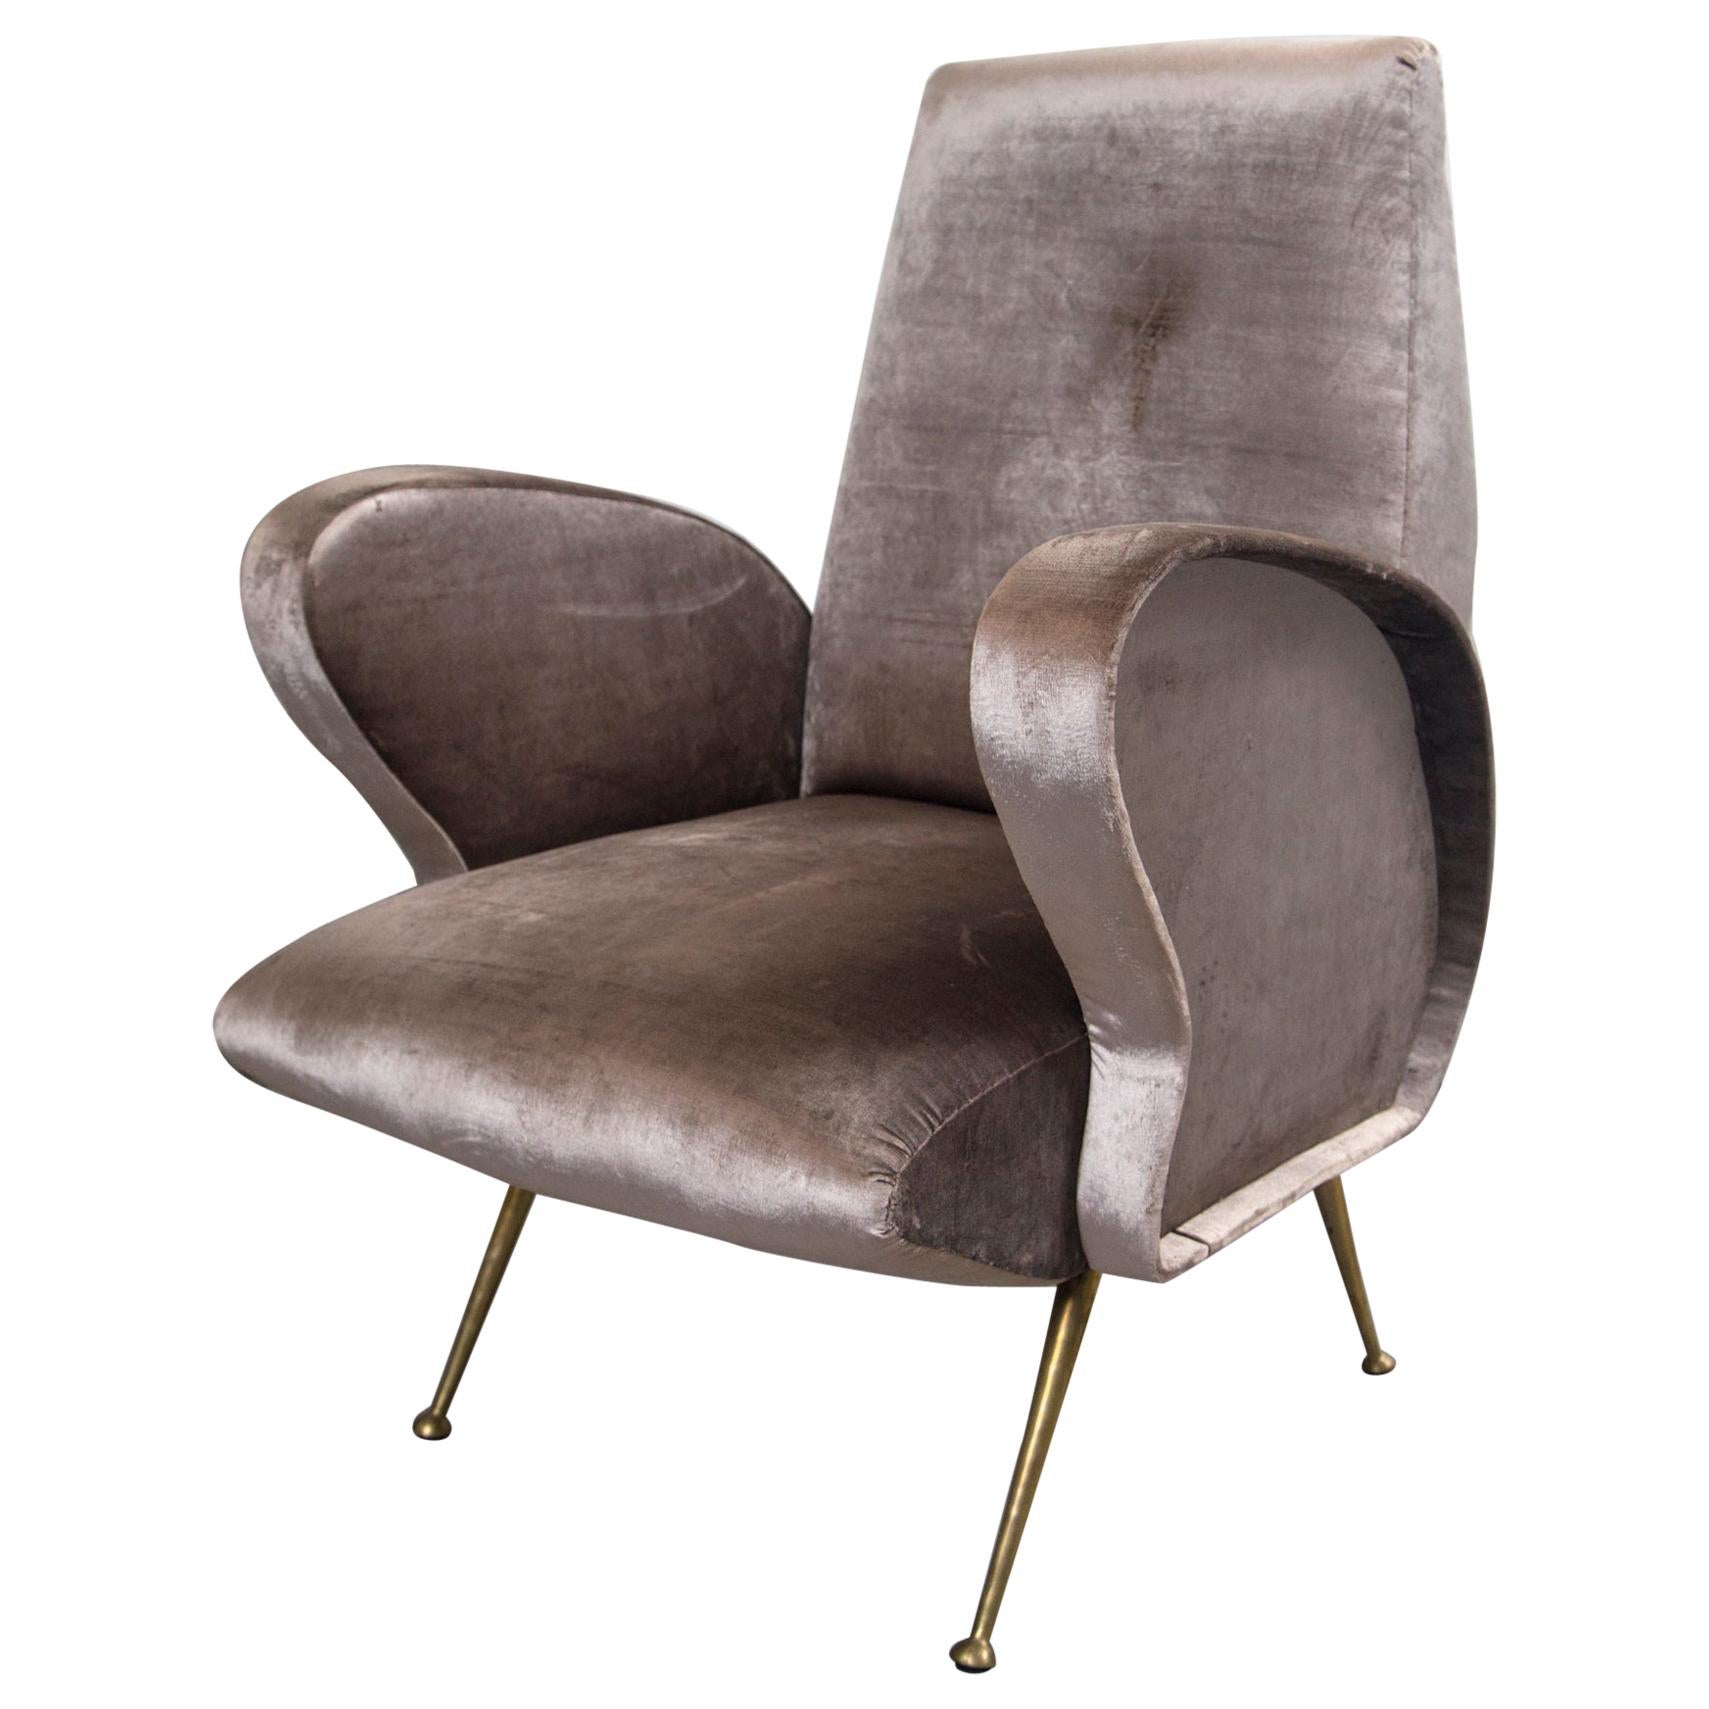 Pair of grey Italian silk velvet chairs, in the style of Gio Ponti.